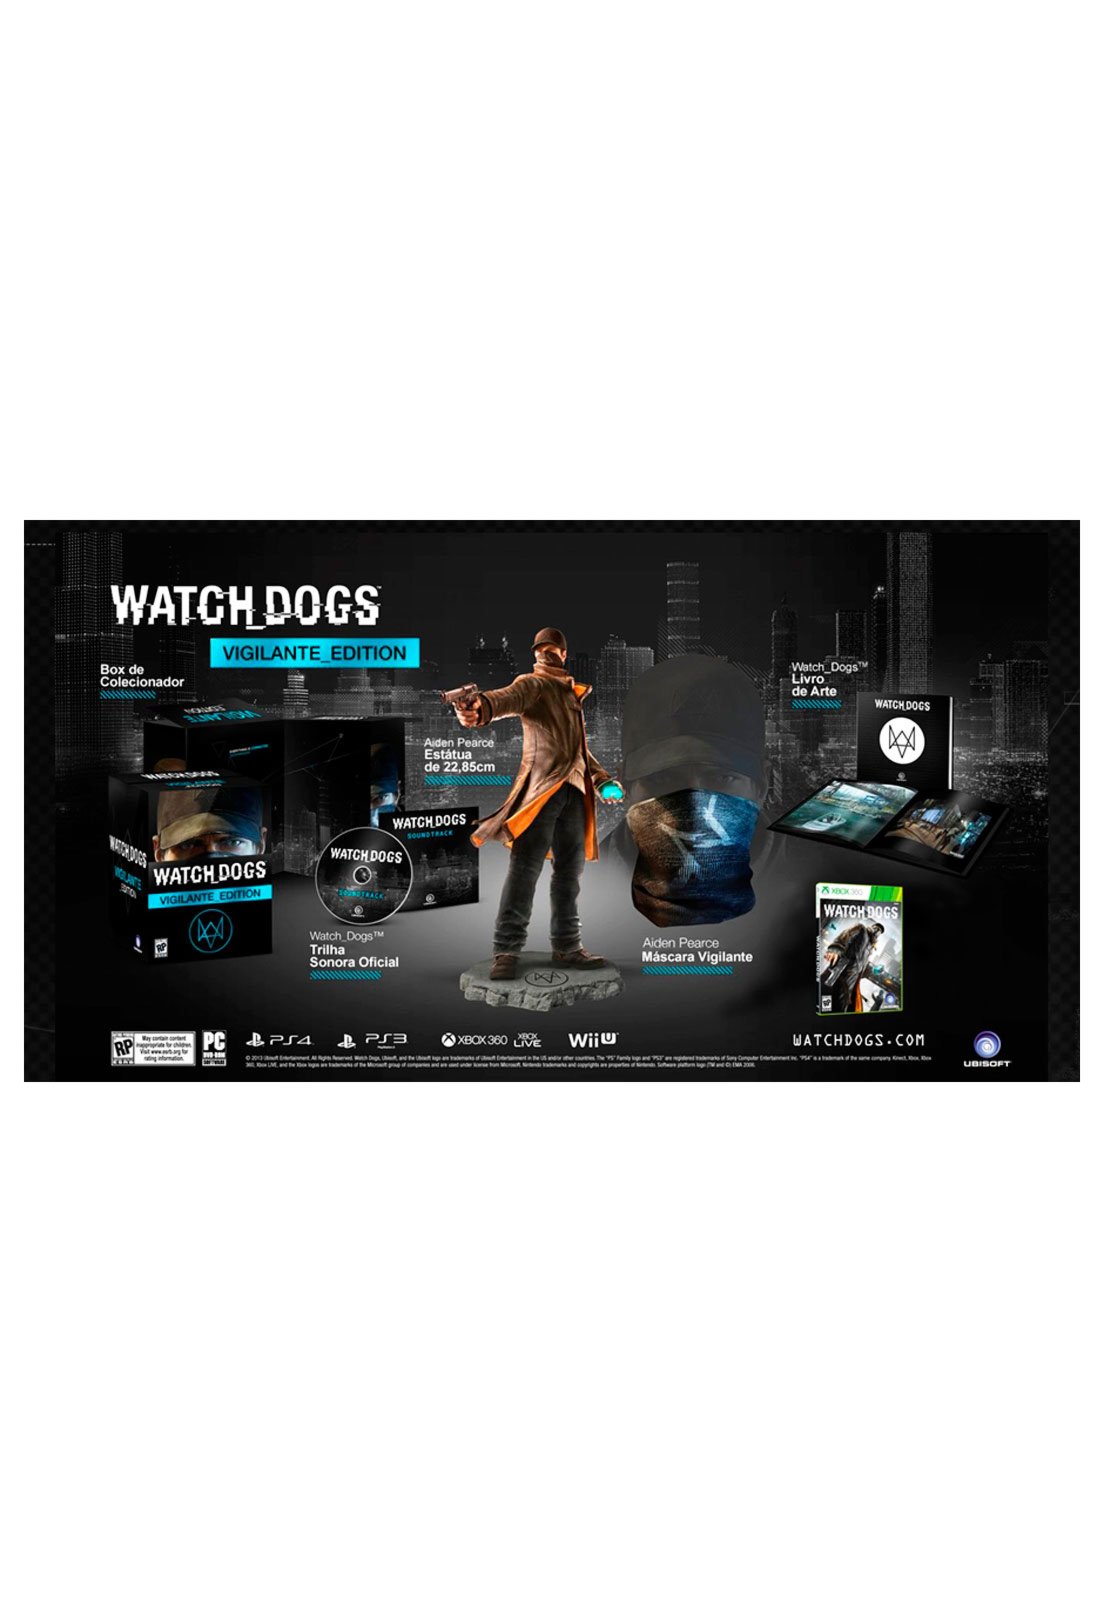 Watch Dogs: confira os requisitos mínimos para jogar no PC - TecMundo